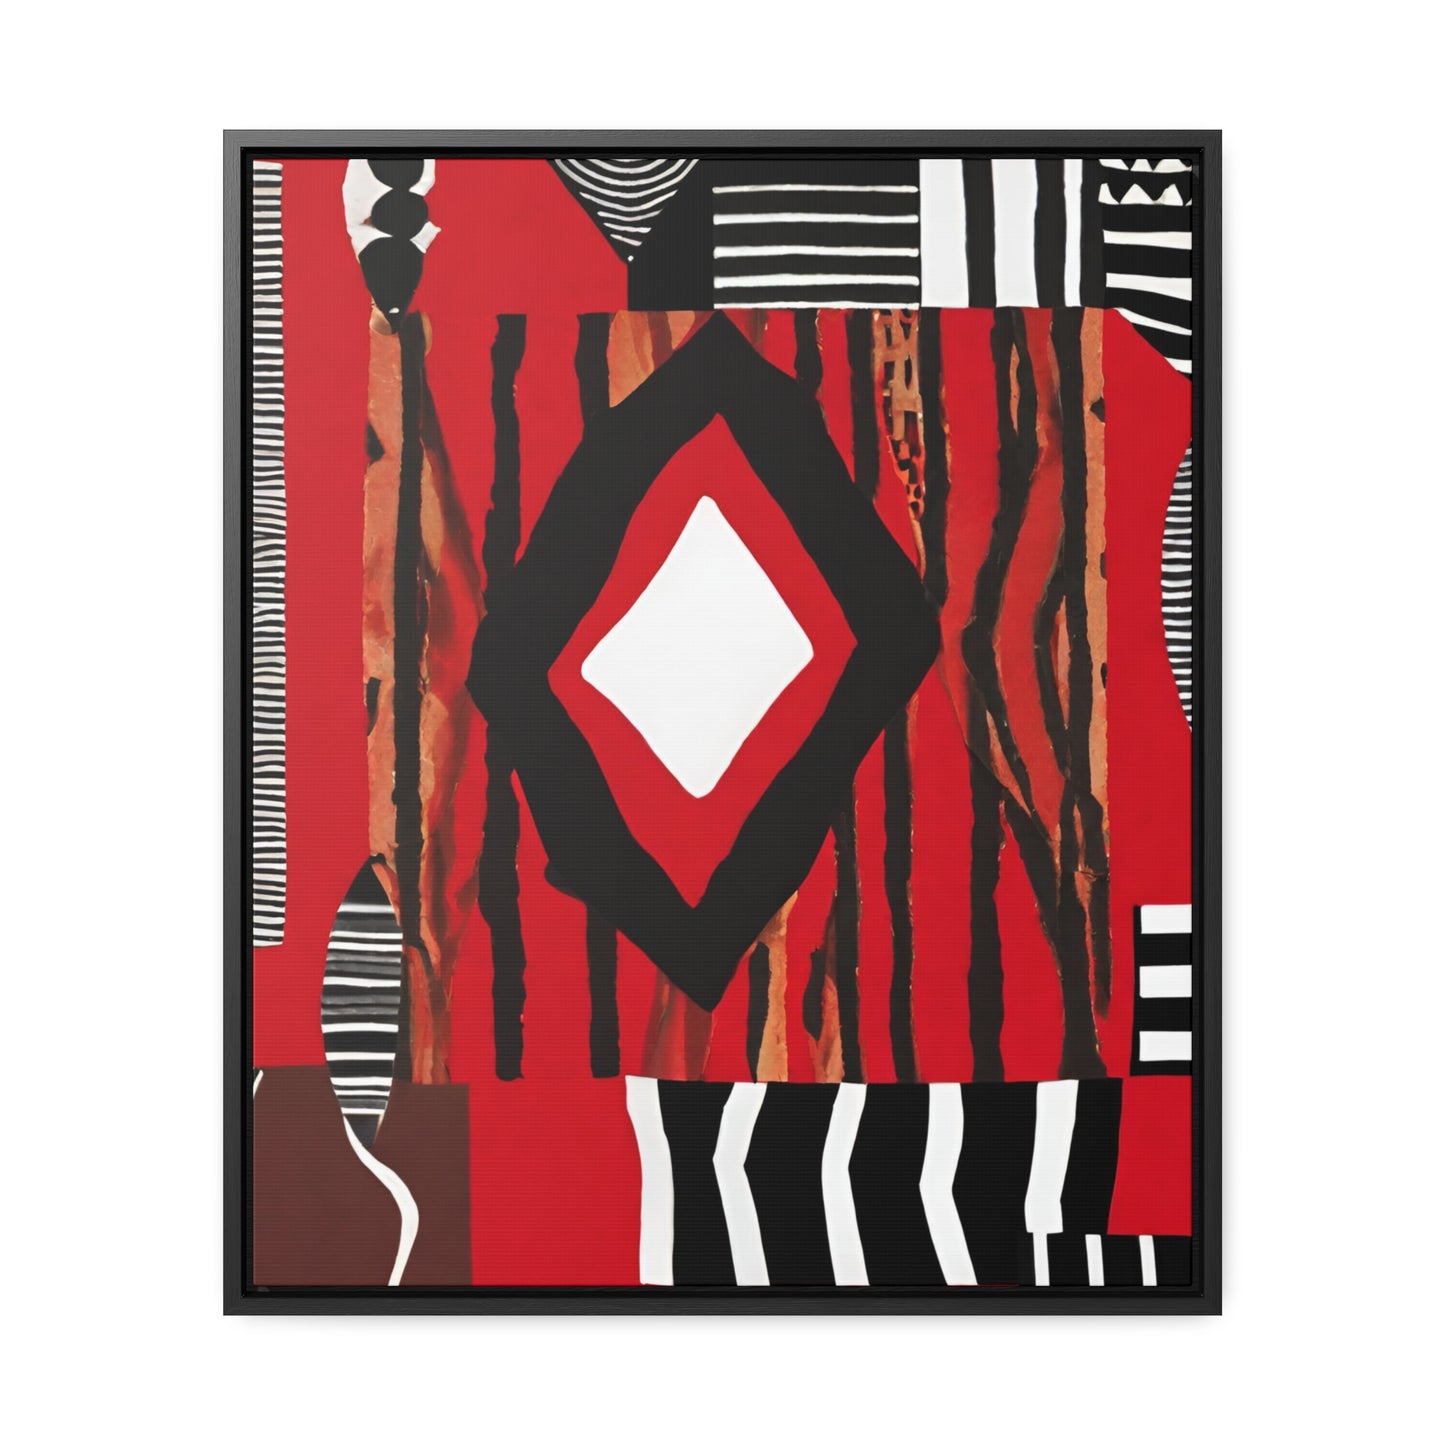 Yumna African Art Framed Canvas Wrap